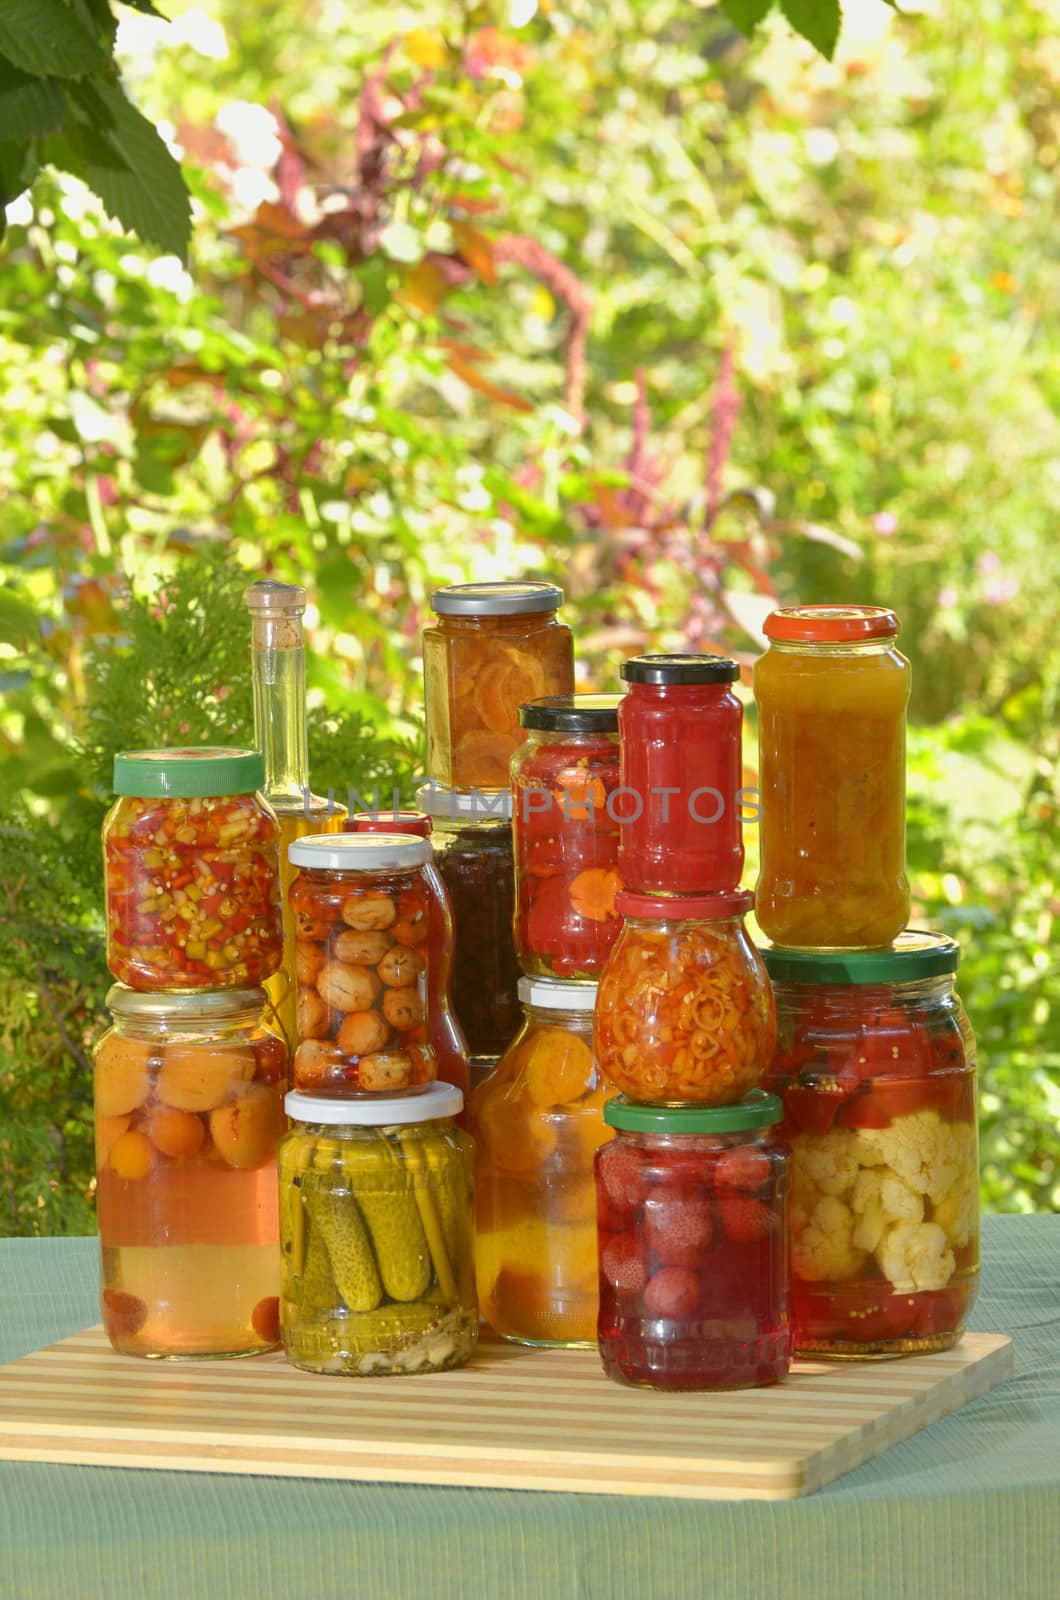 autumn preserves - vegetables in jars